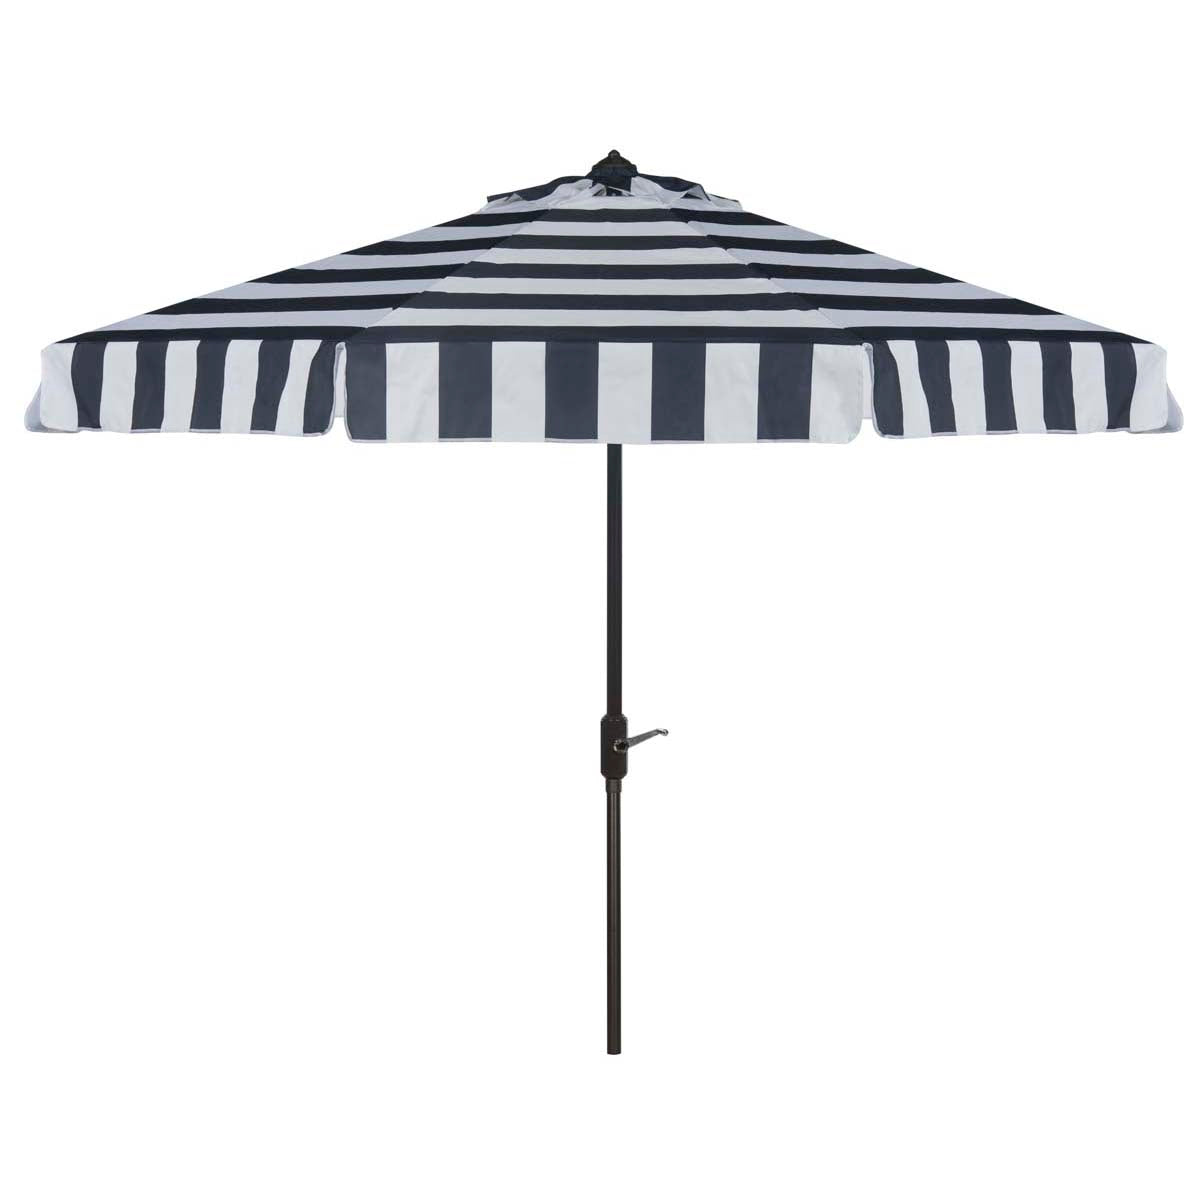 Safavieh Uv Resistant Elsa Fashion Line 9Ft Auto Tilt Umbrella , PAT8003 - Navy/White